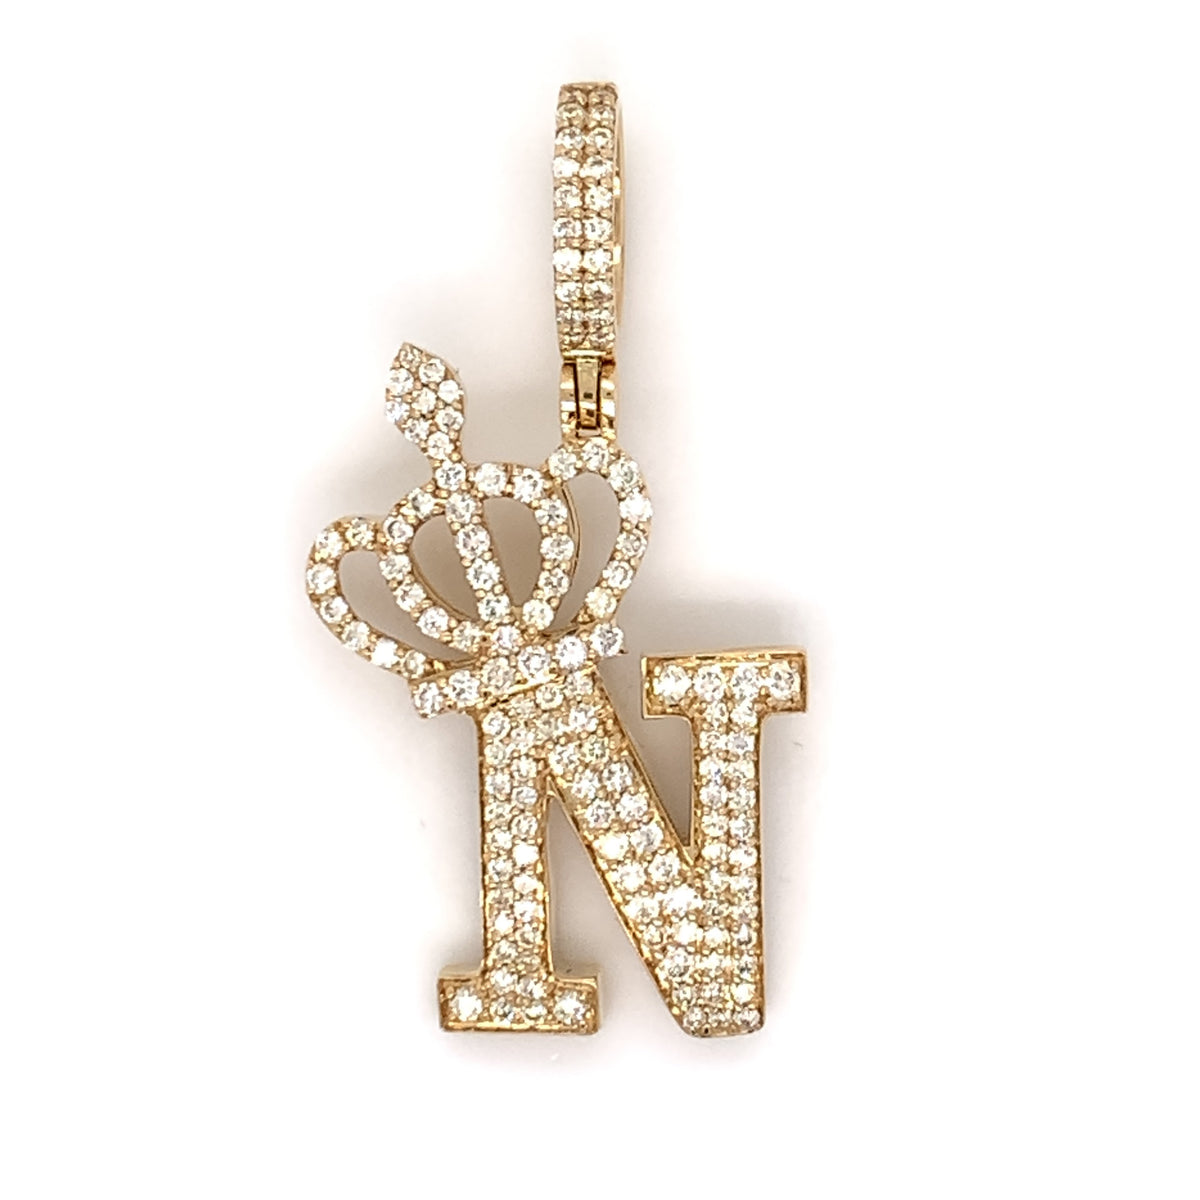 1.30 CT. Diamond Initial "N" Pendant in 10K Gold - White Carat - USA & Canada